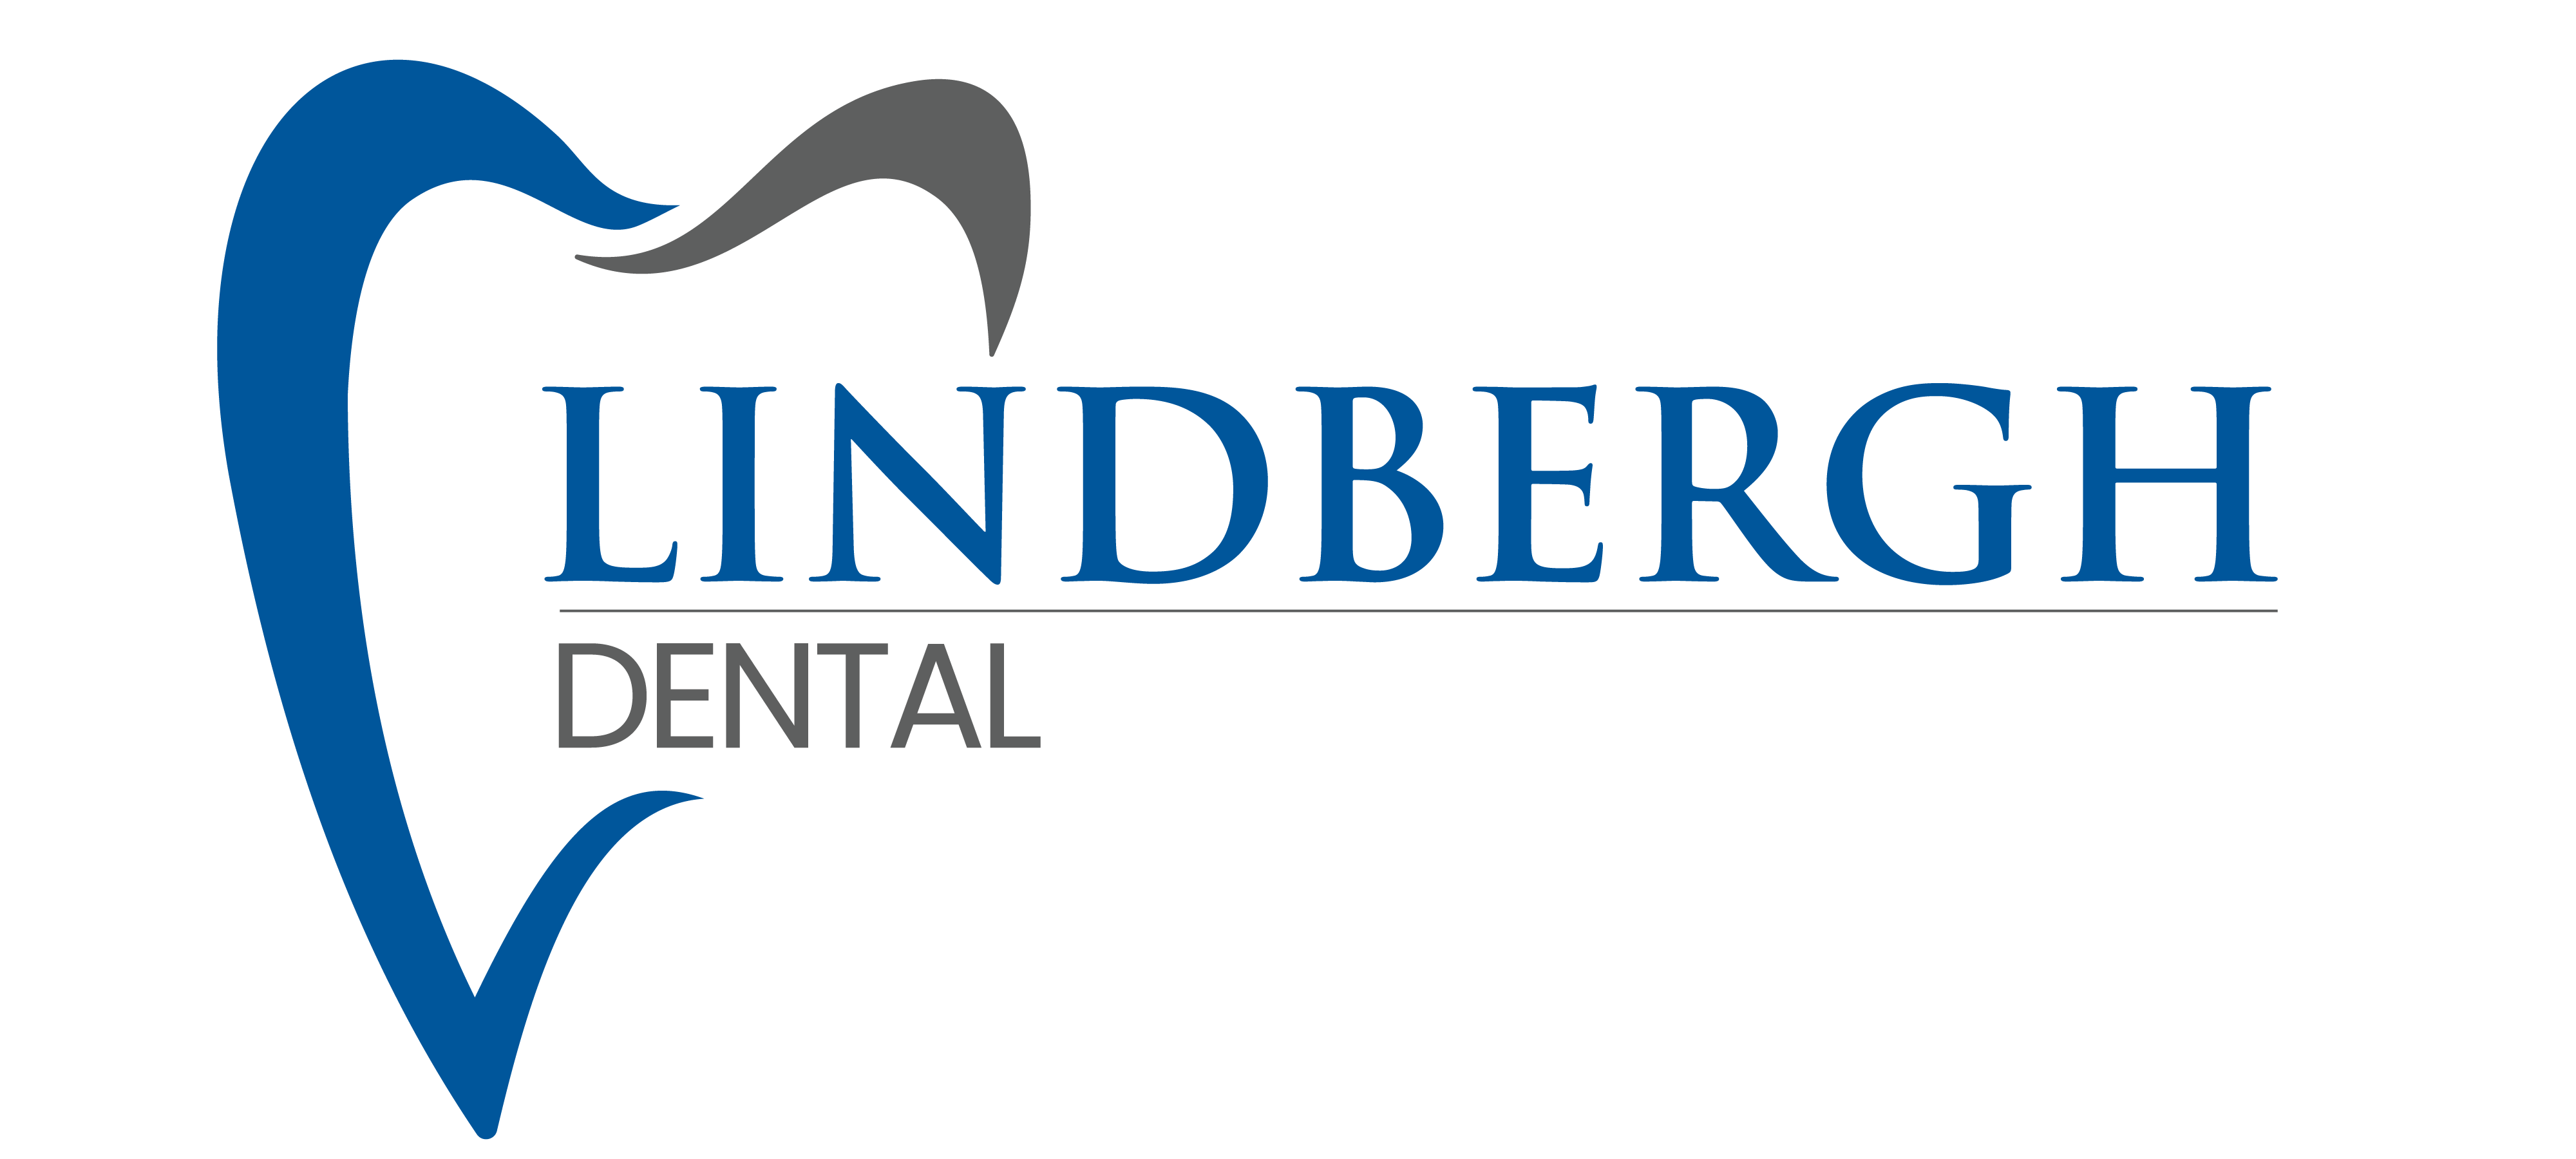 Lindbergh Dental Logo